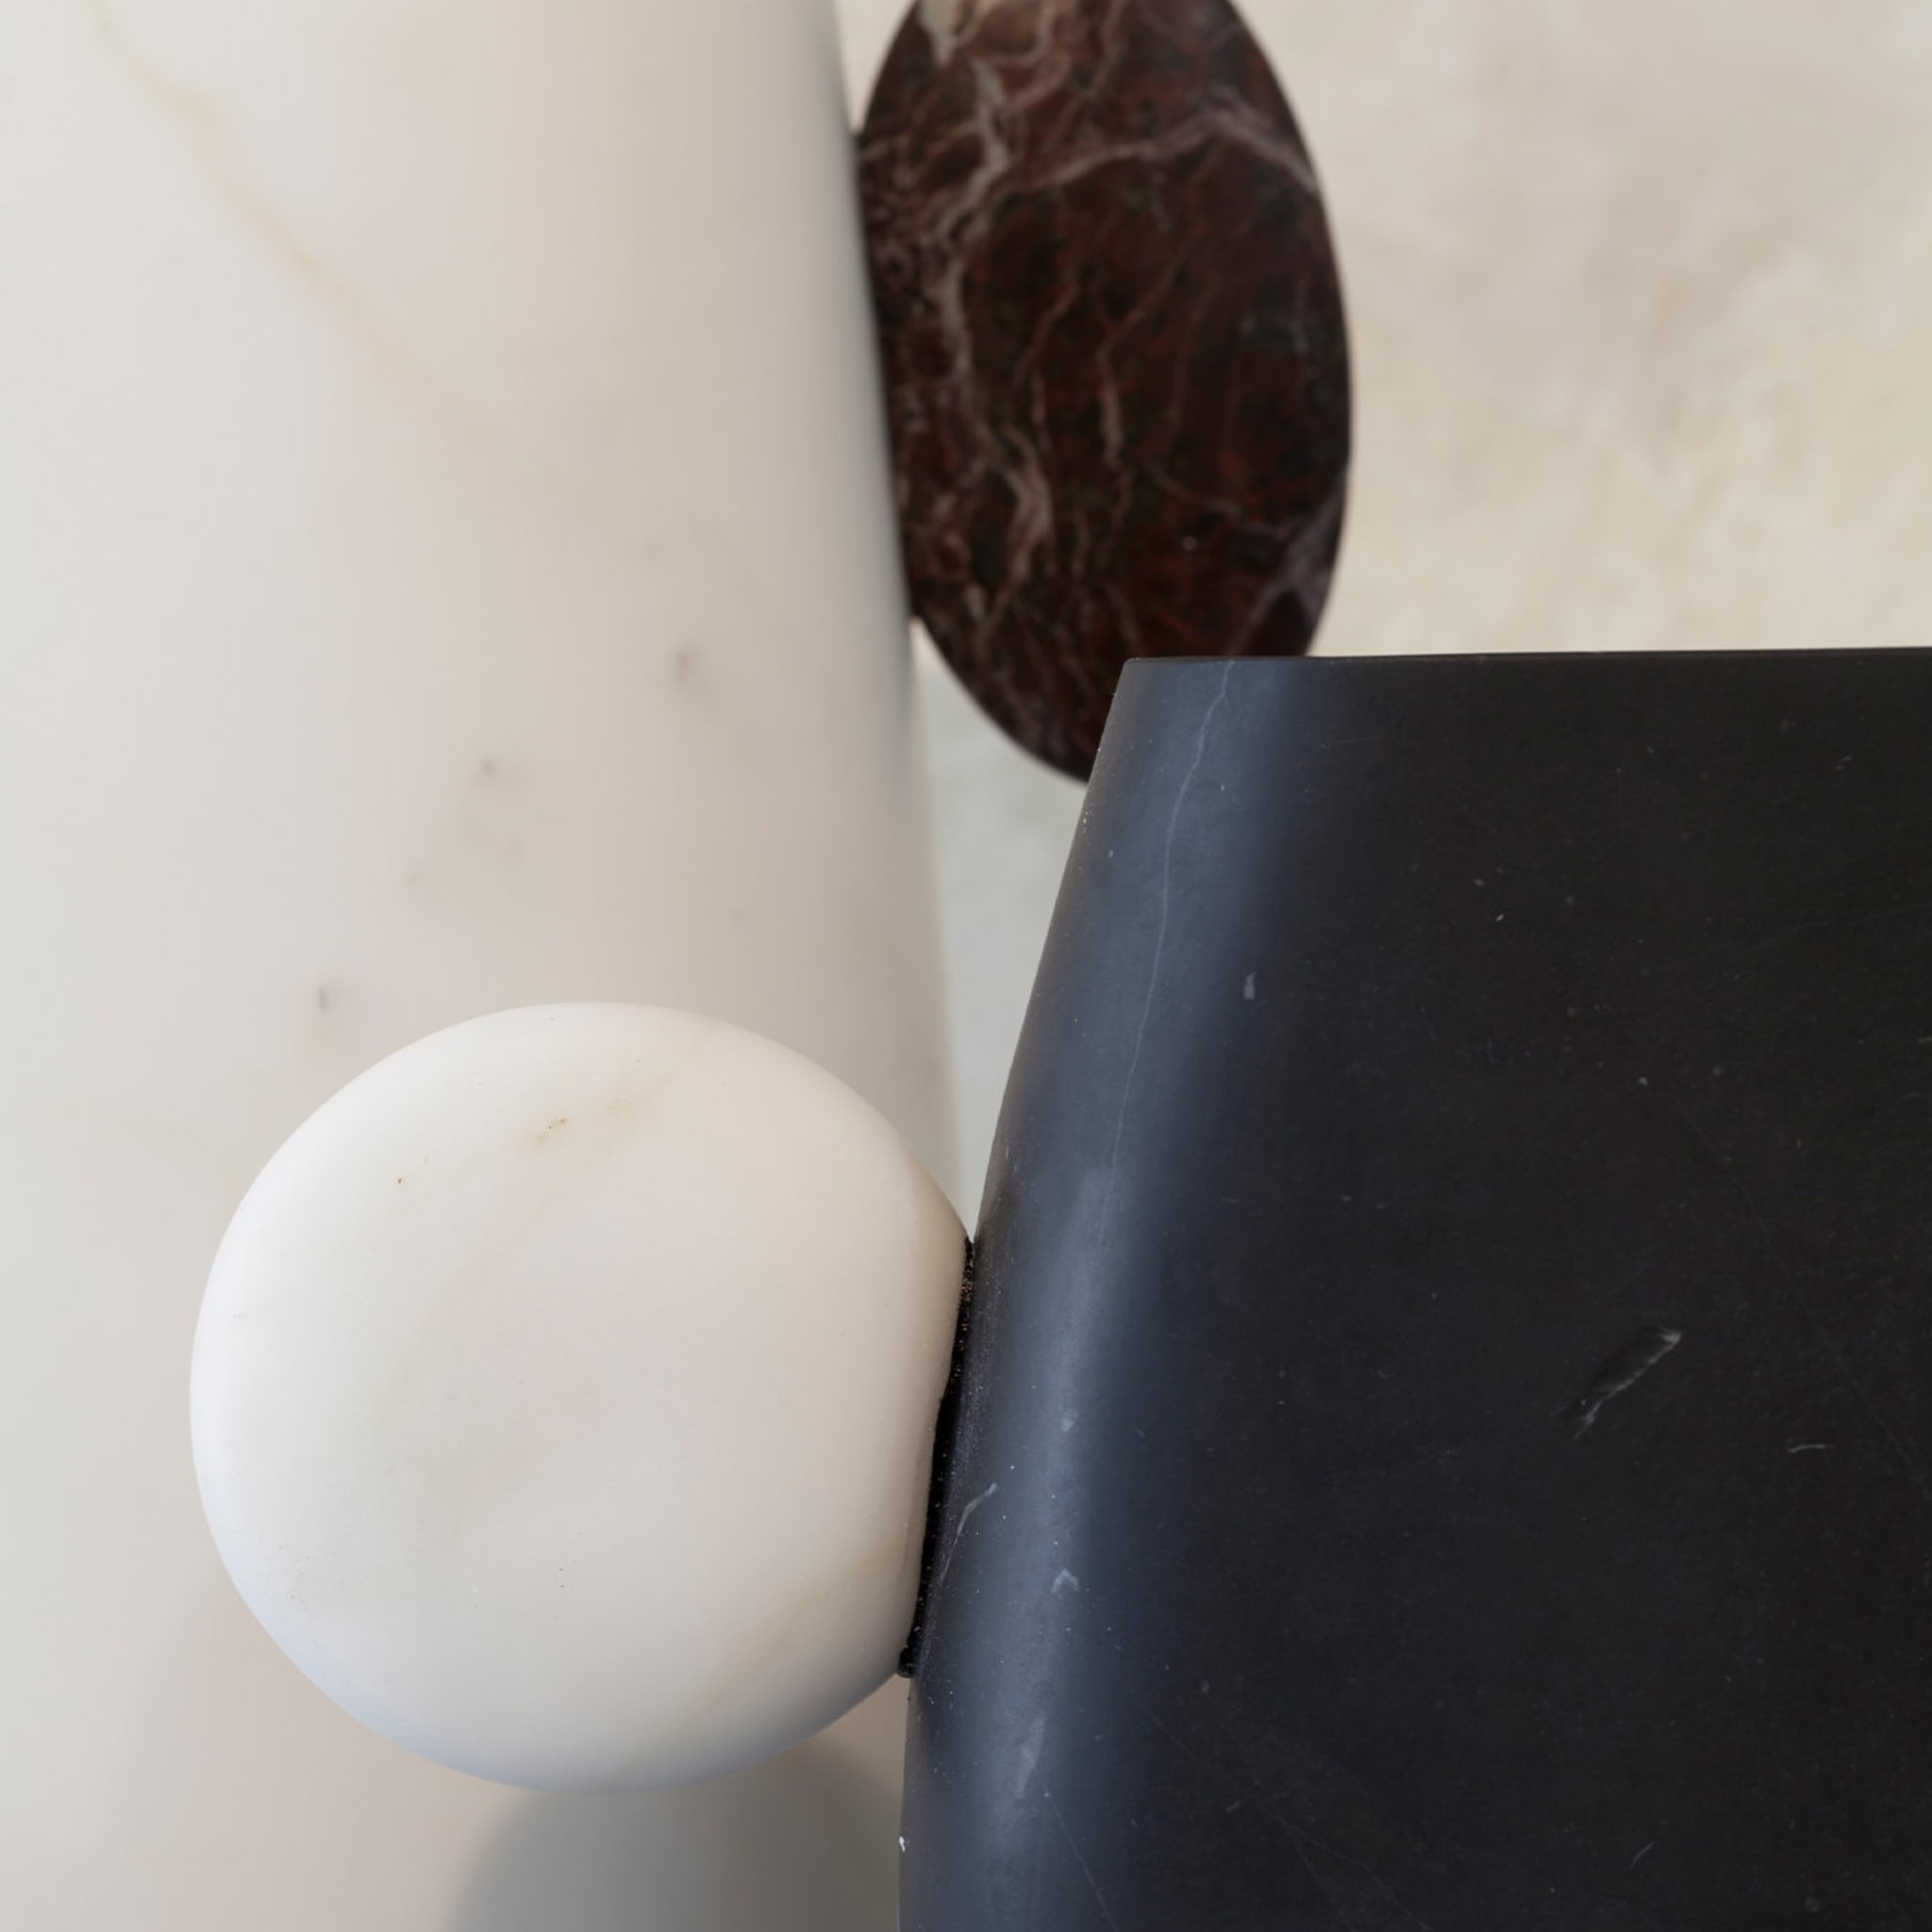 Tacca Black Marquina/White Michelangelo Vase by Matteo Cibic #2 - Alternative view 3